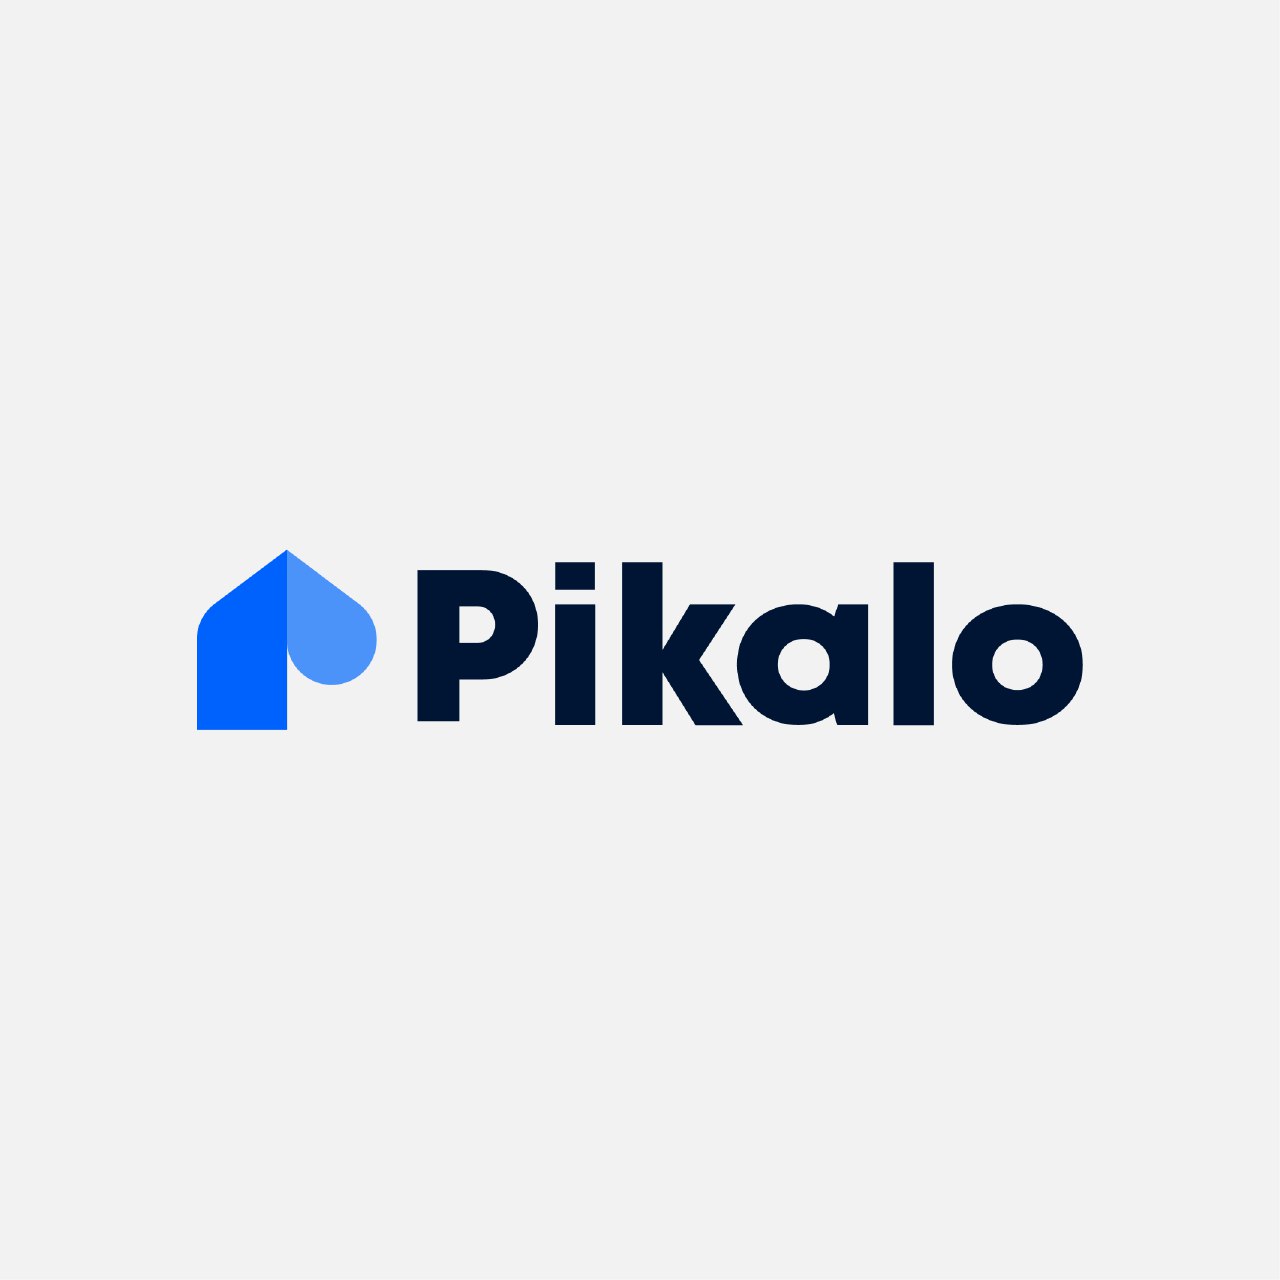 Pikalo Logo preview image.